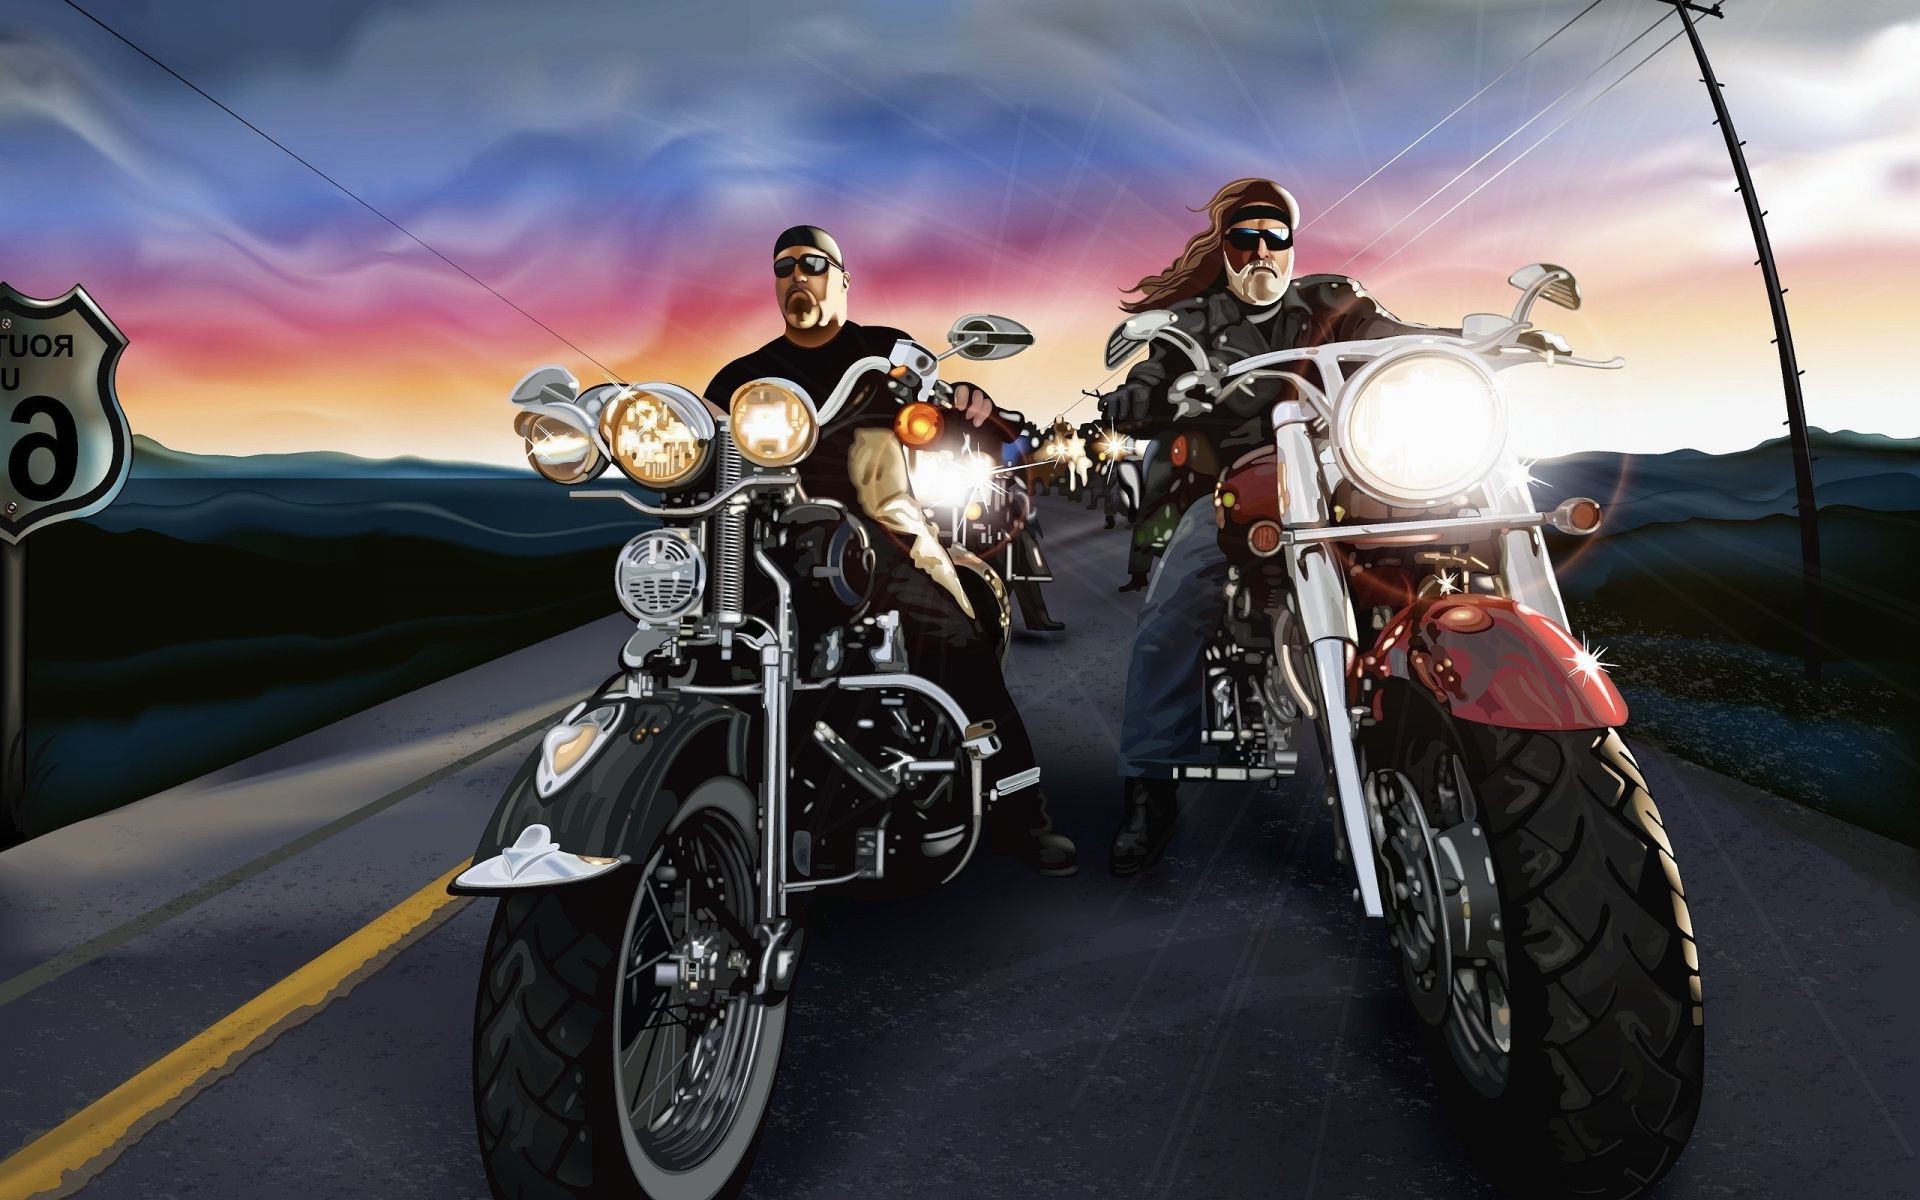 classic motorcycles bike vehicle transportation system drive wheel hurry race fast motorbike road engine